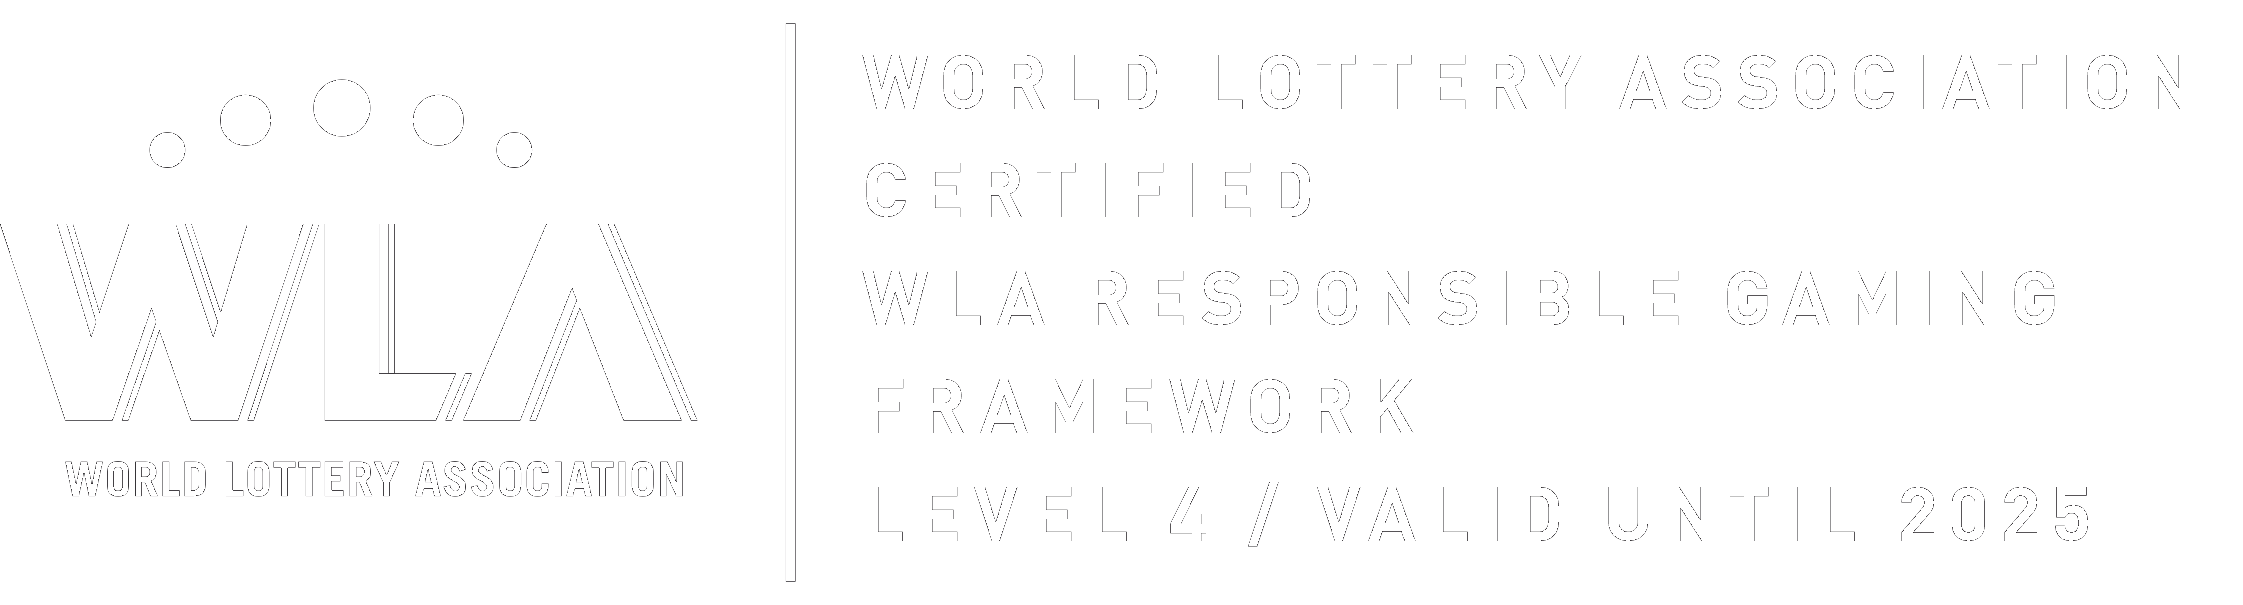 World Lottery Association Certified